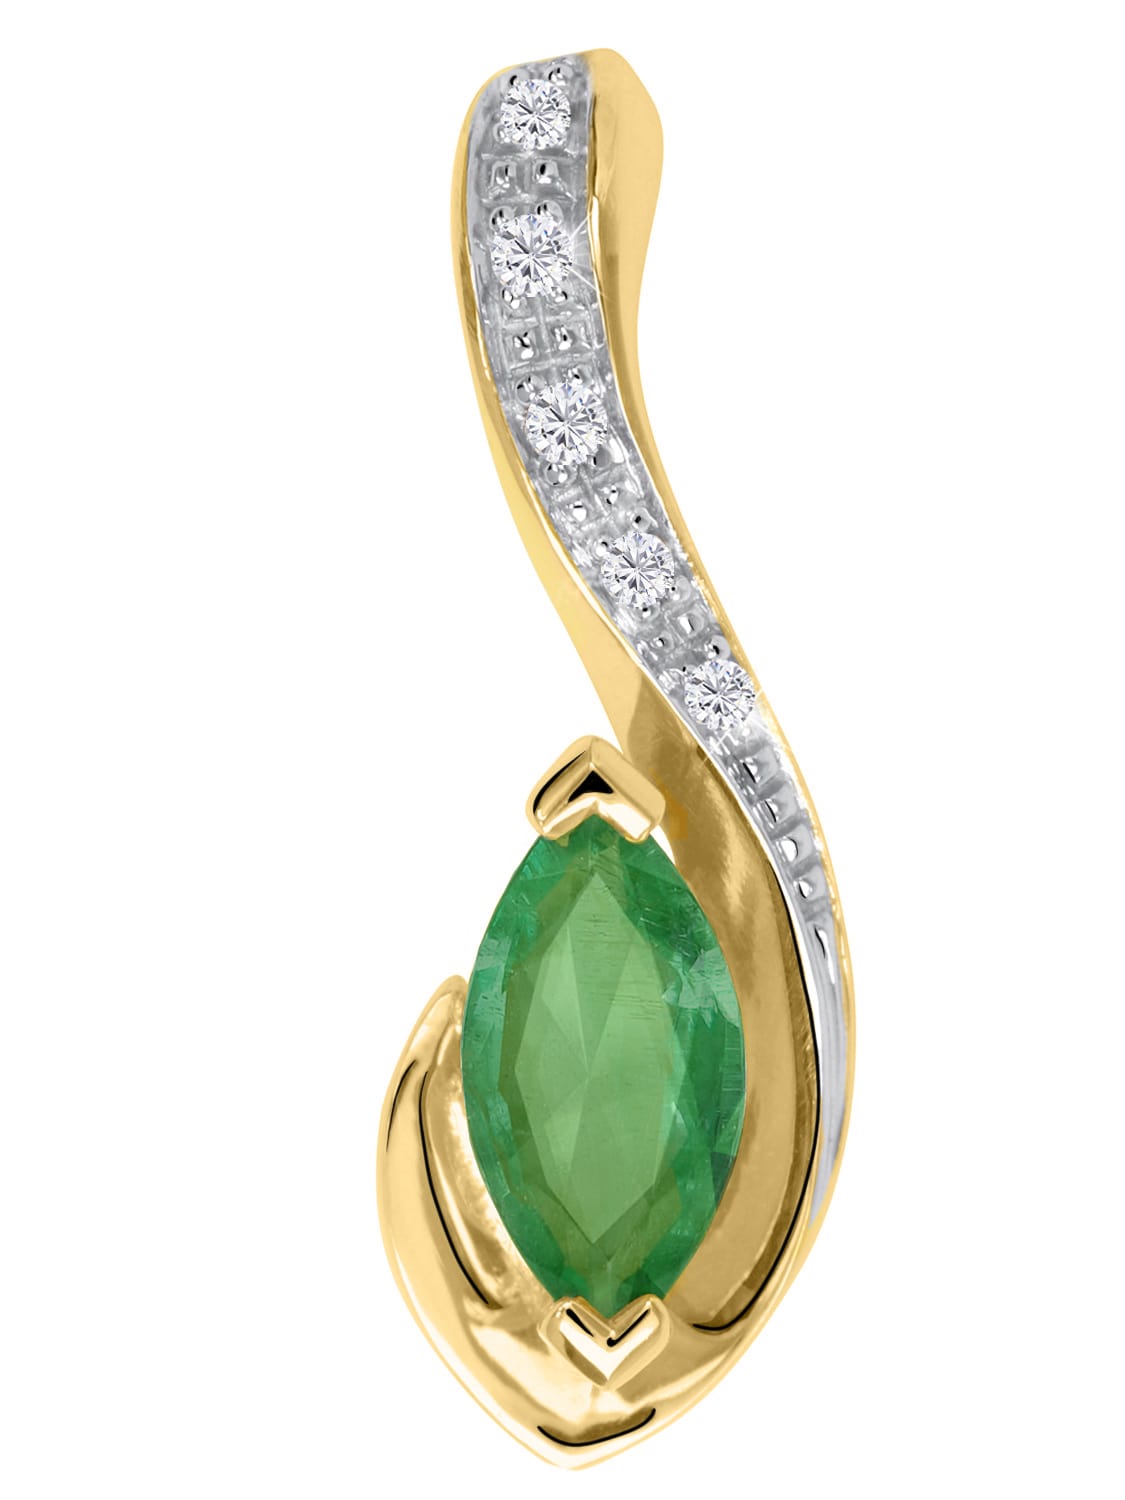 Eunundi - Smaragd Diamant Edelsteinanhänger 585 Gold - 0,02ct.